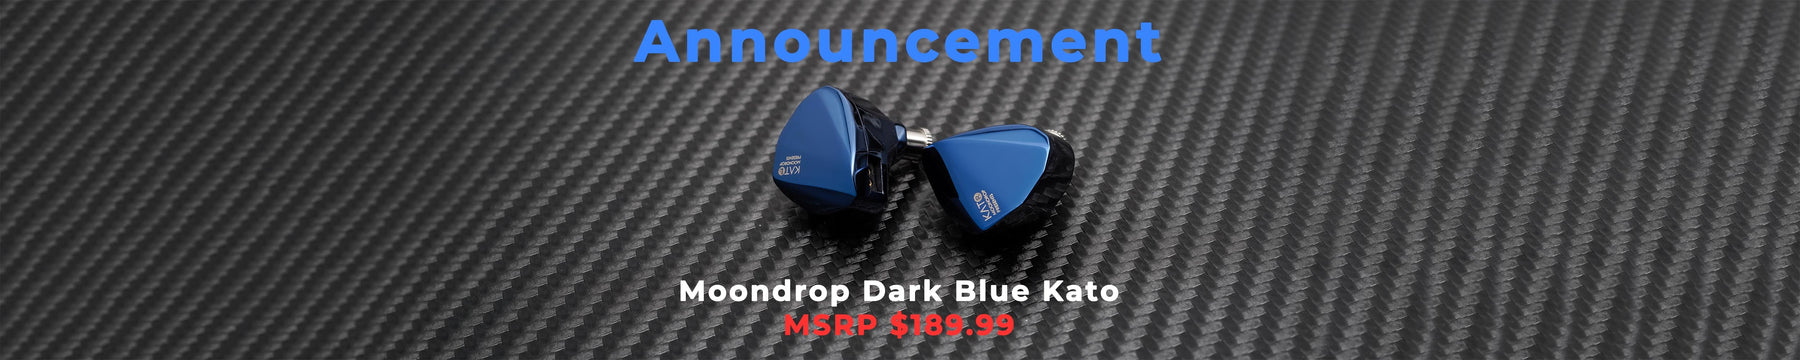 Moondrop Presents Kato In All-New Dark Blue Color Variant